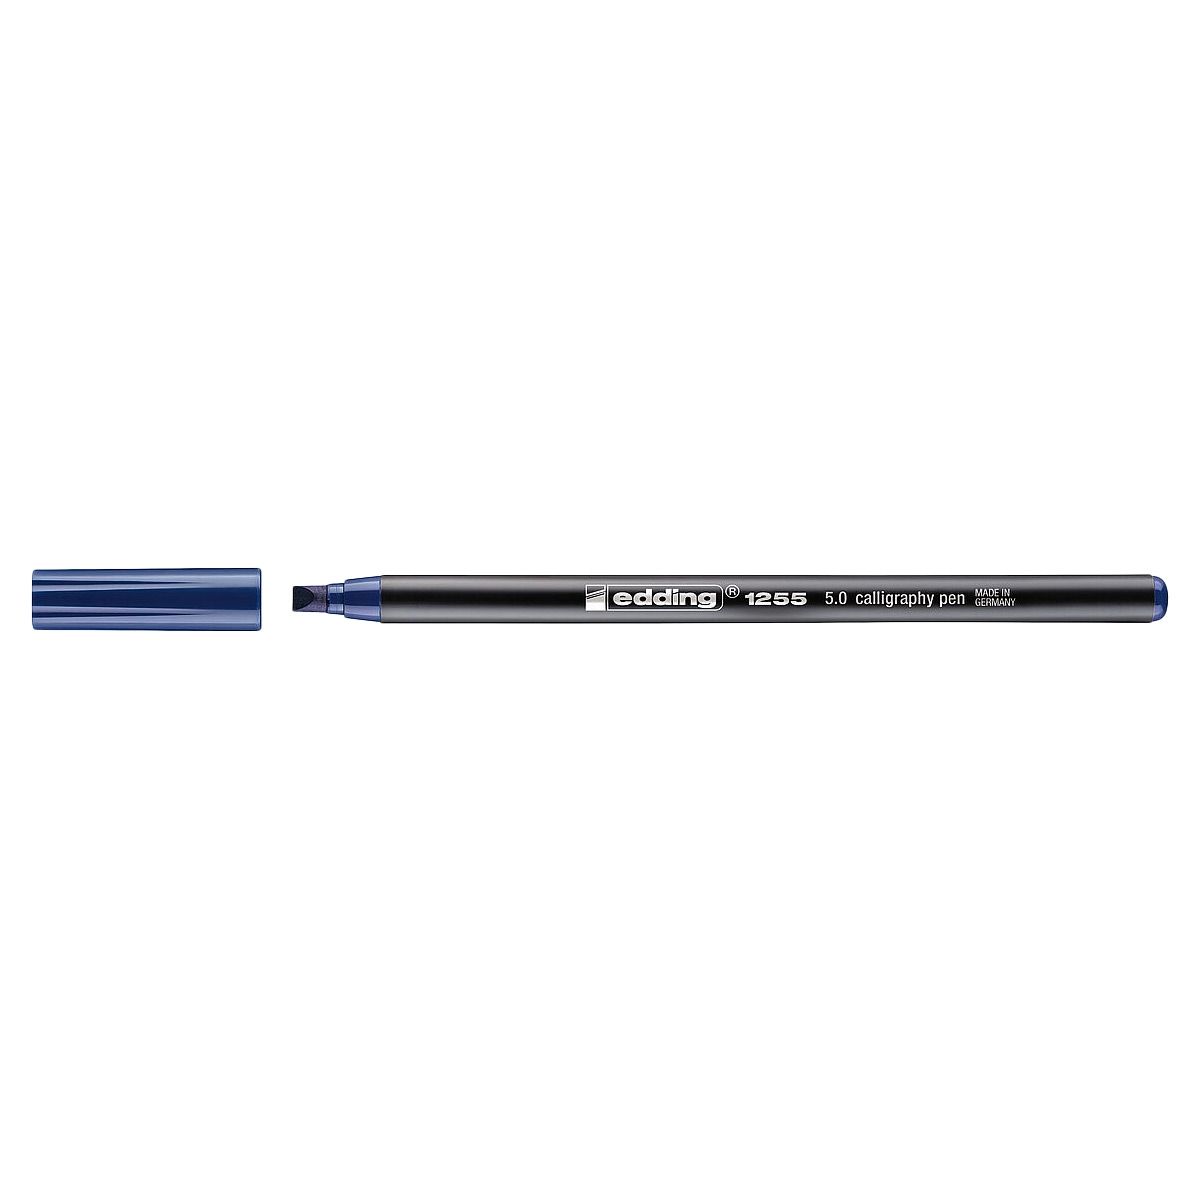 Edding 1255 Calligraphy Pen Set of 3 Steel Blue (Assorted Nibs)